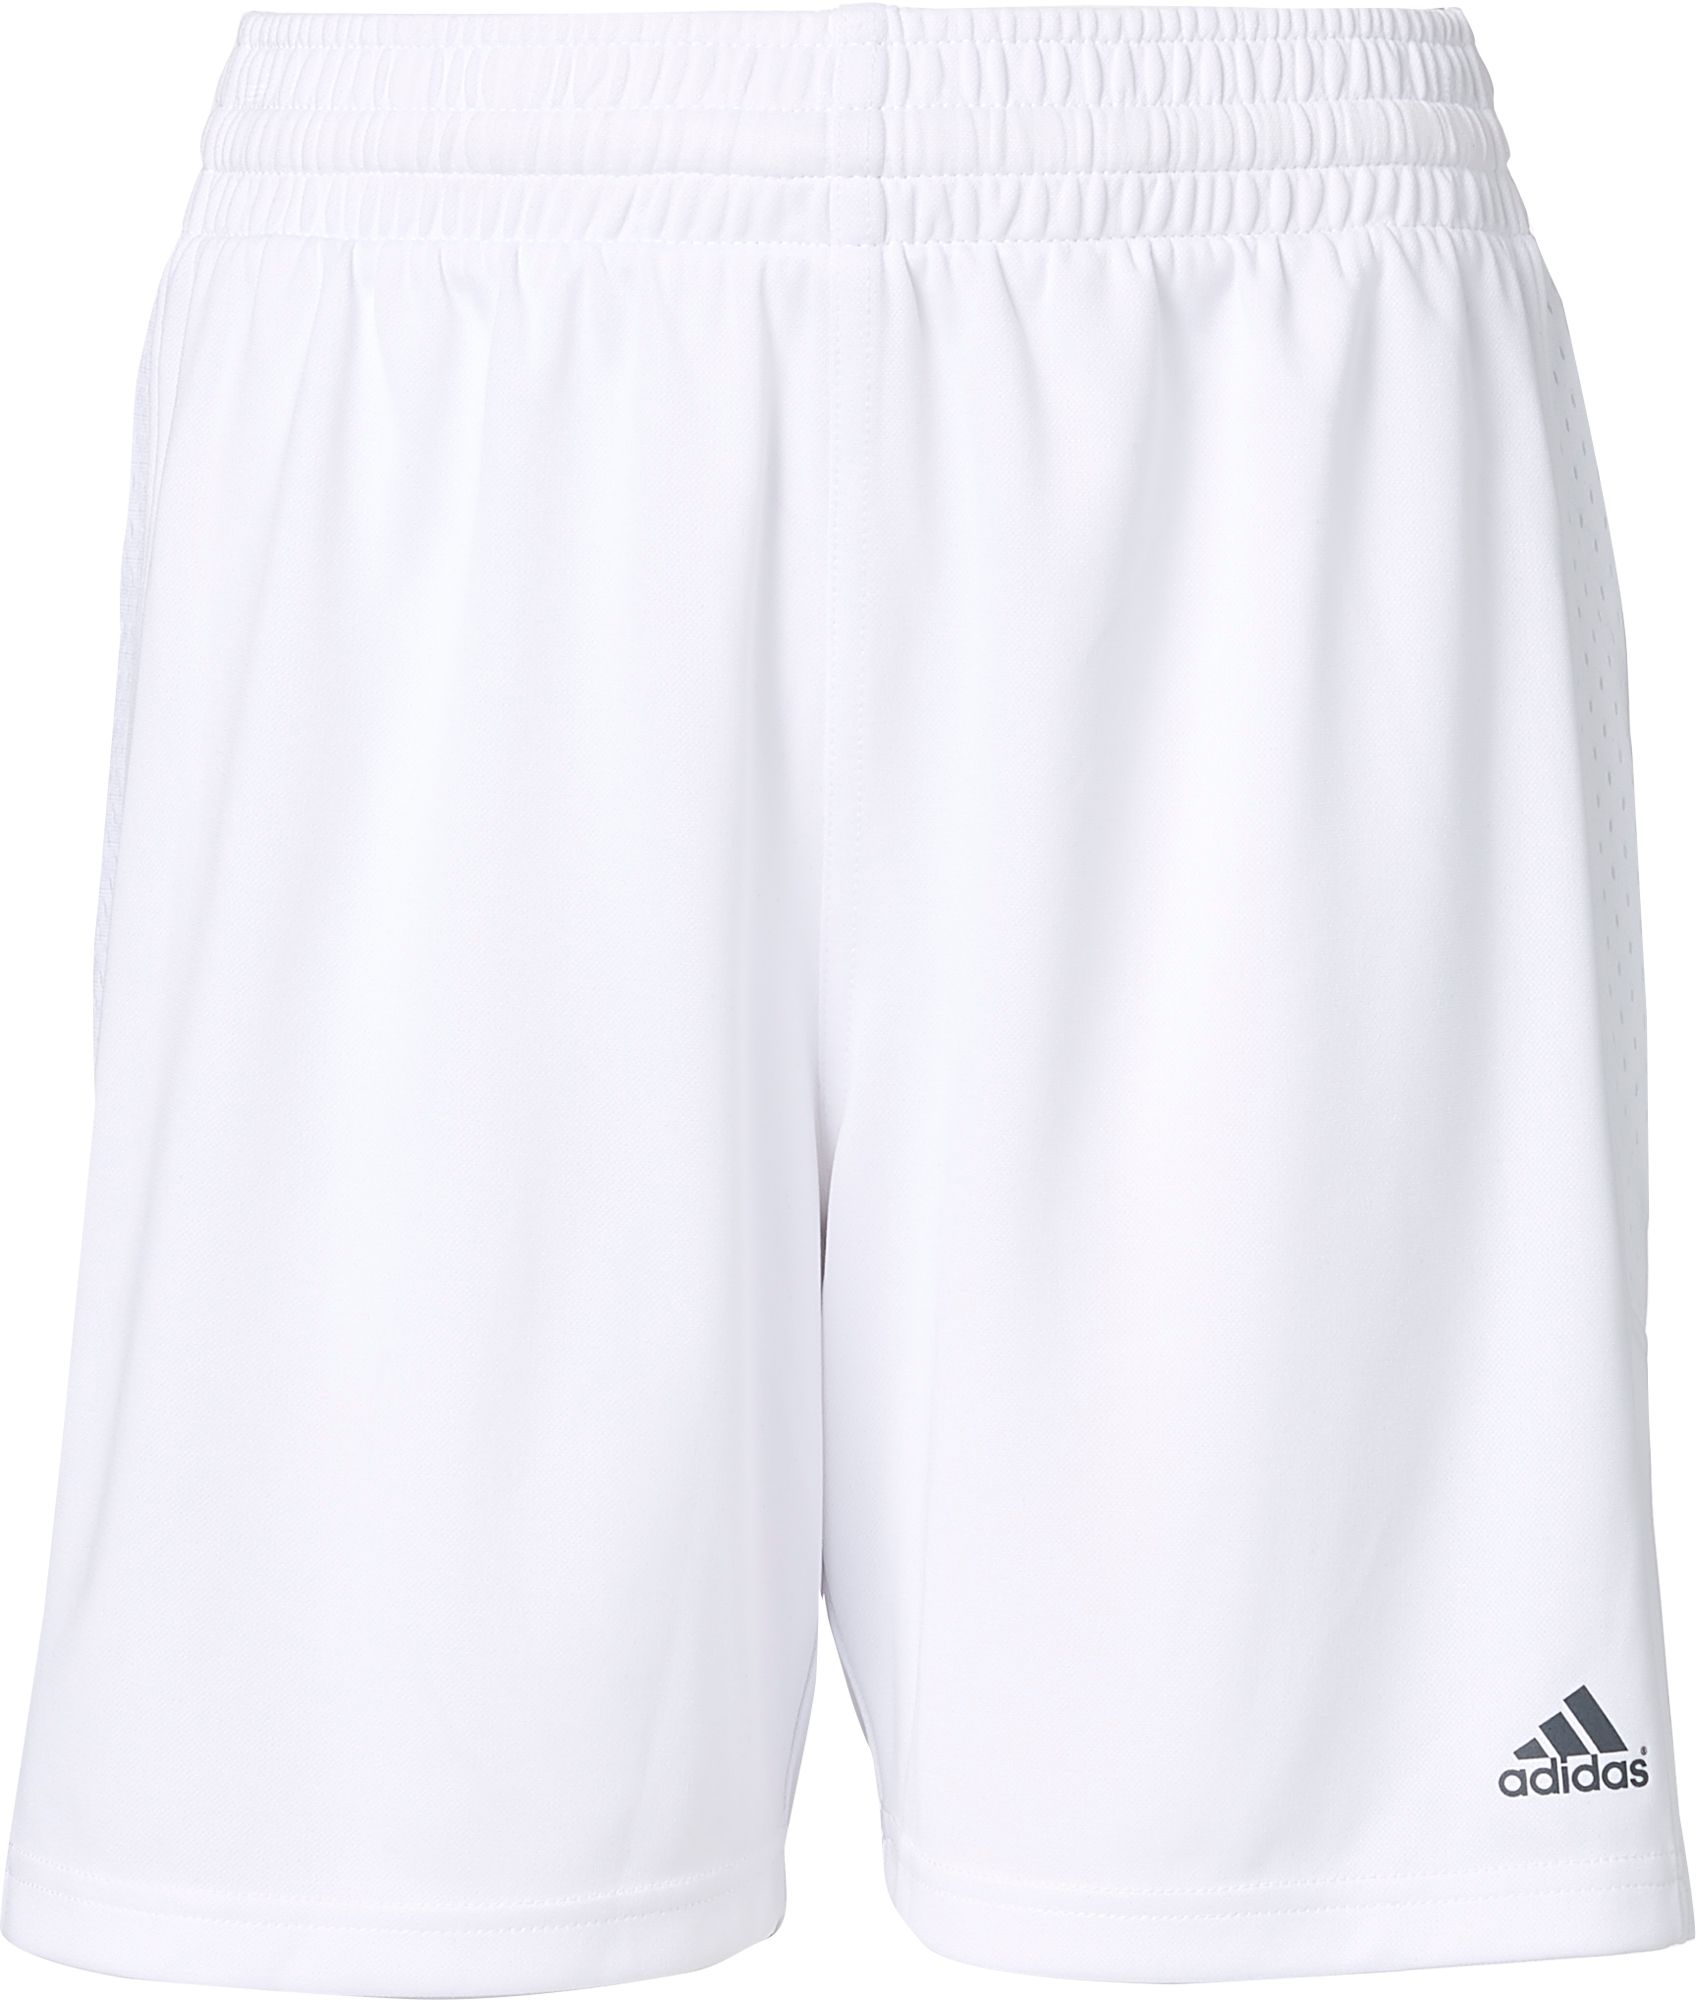 boys adidas football shorts